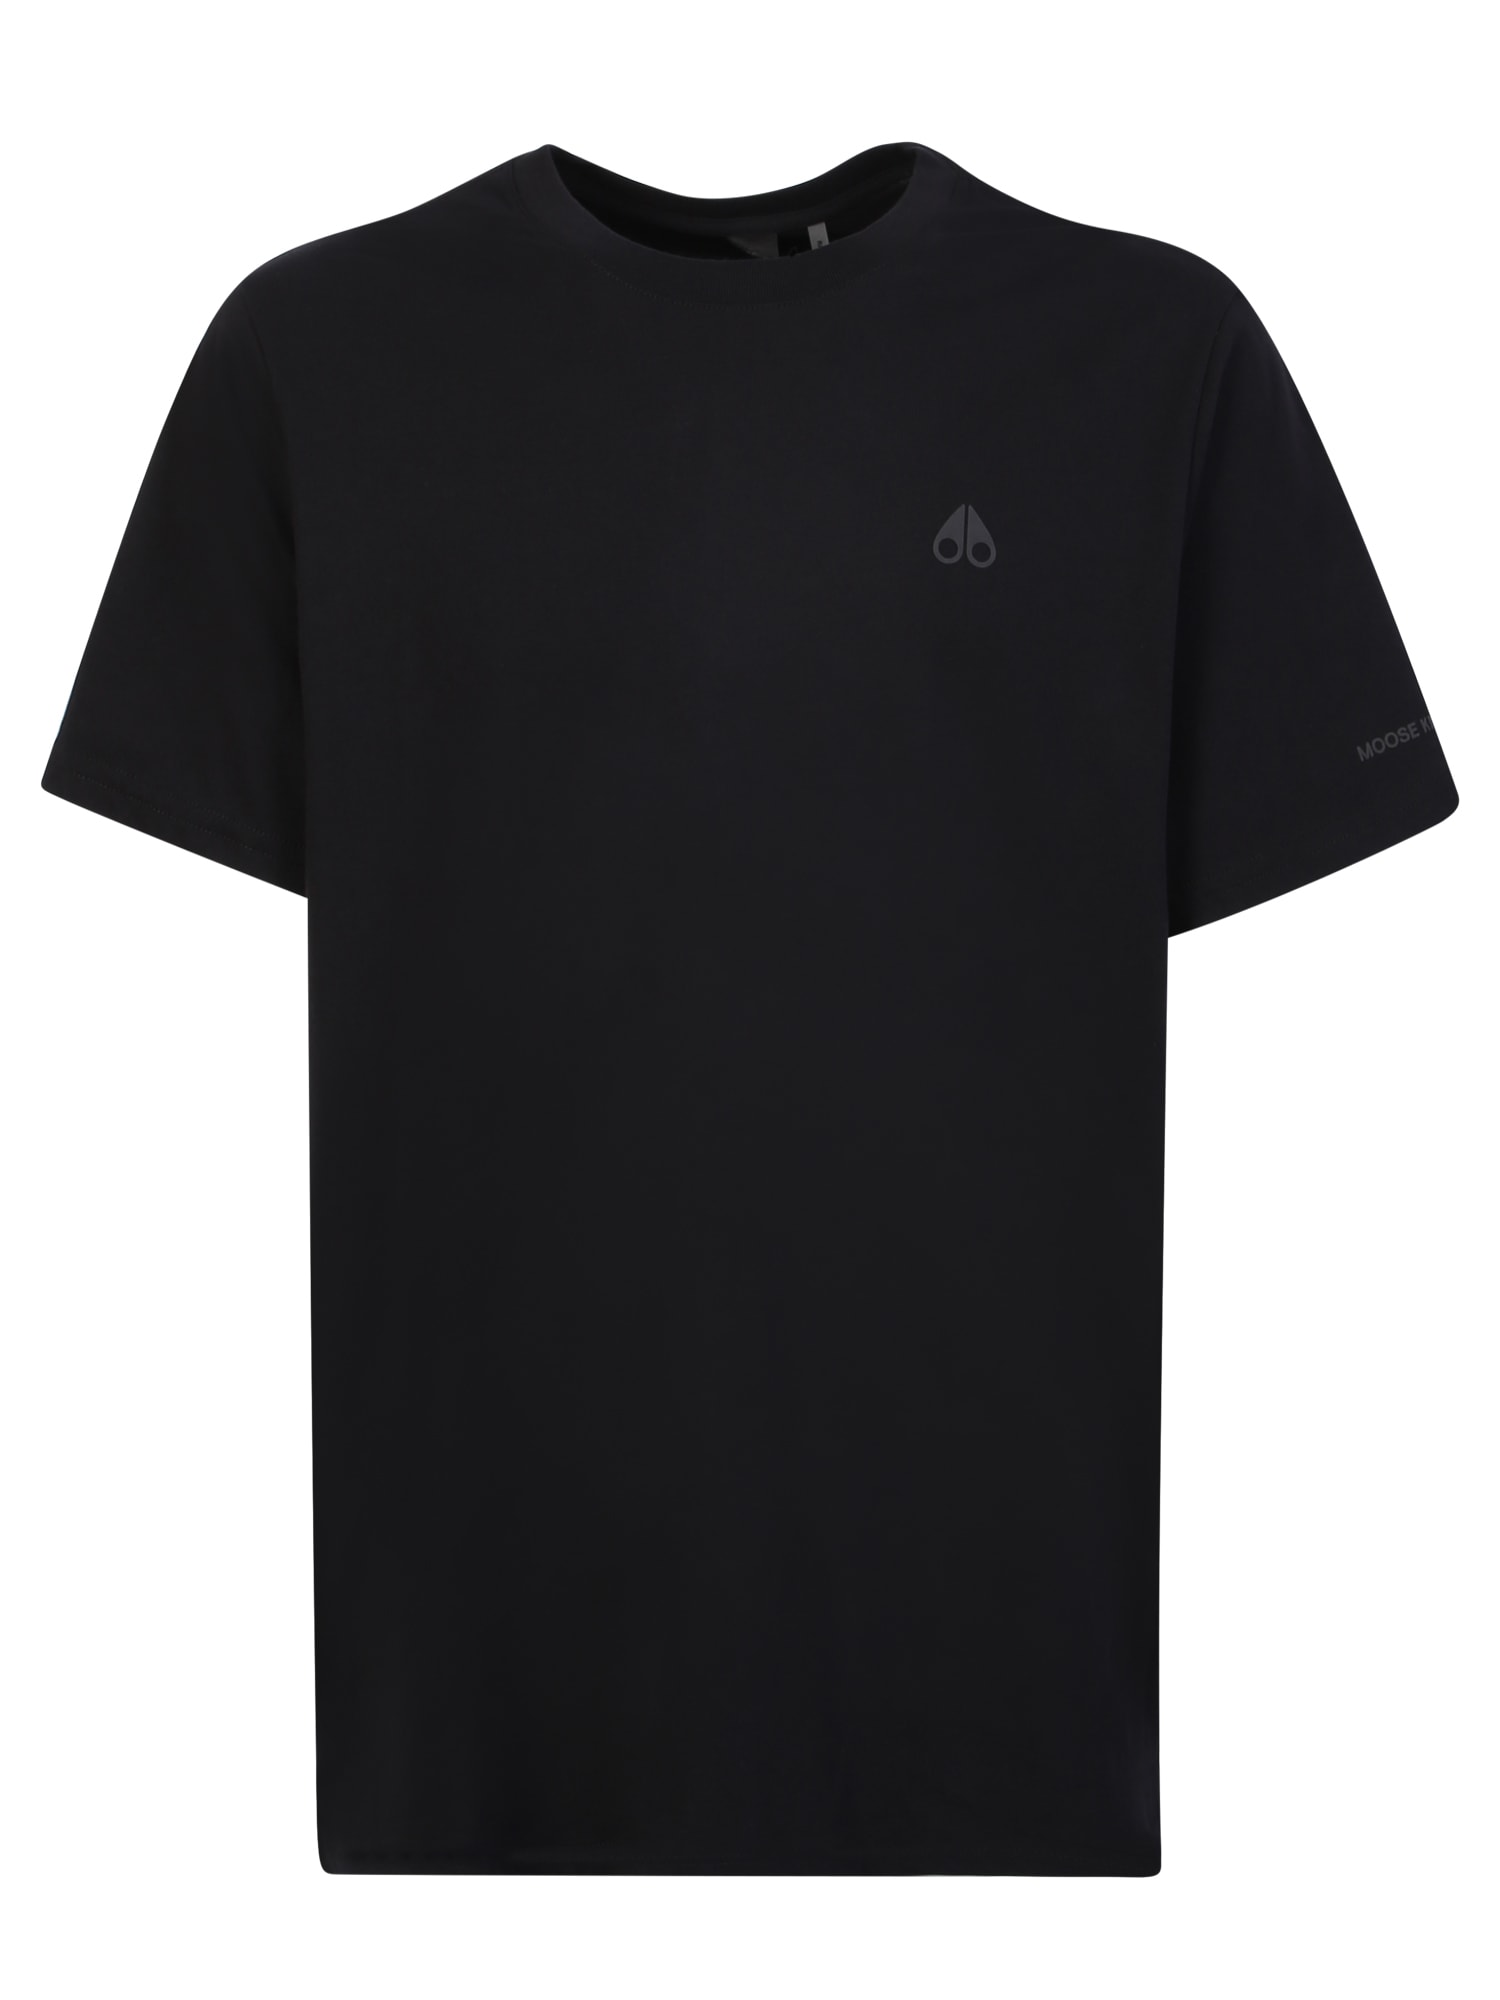 Black Satellite T-shirt